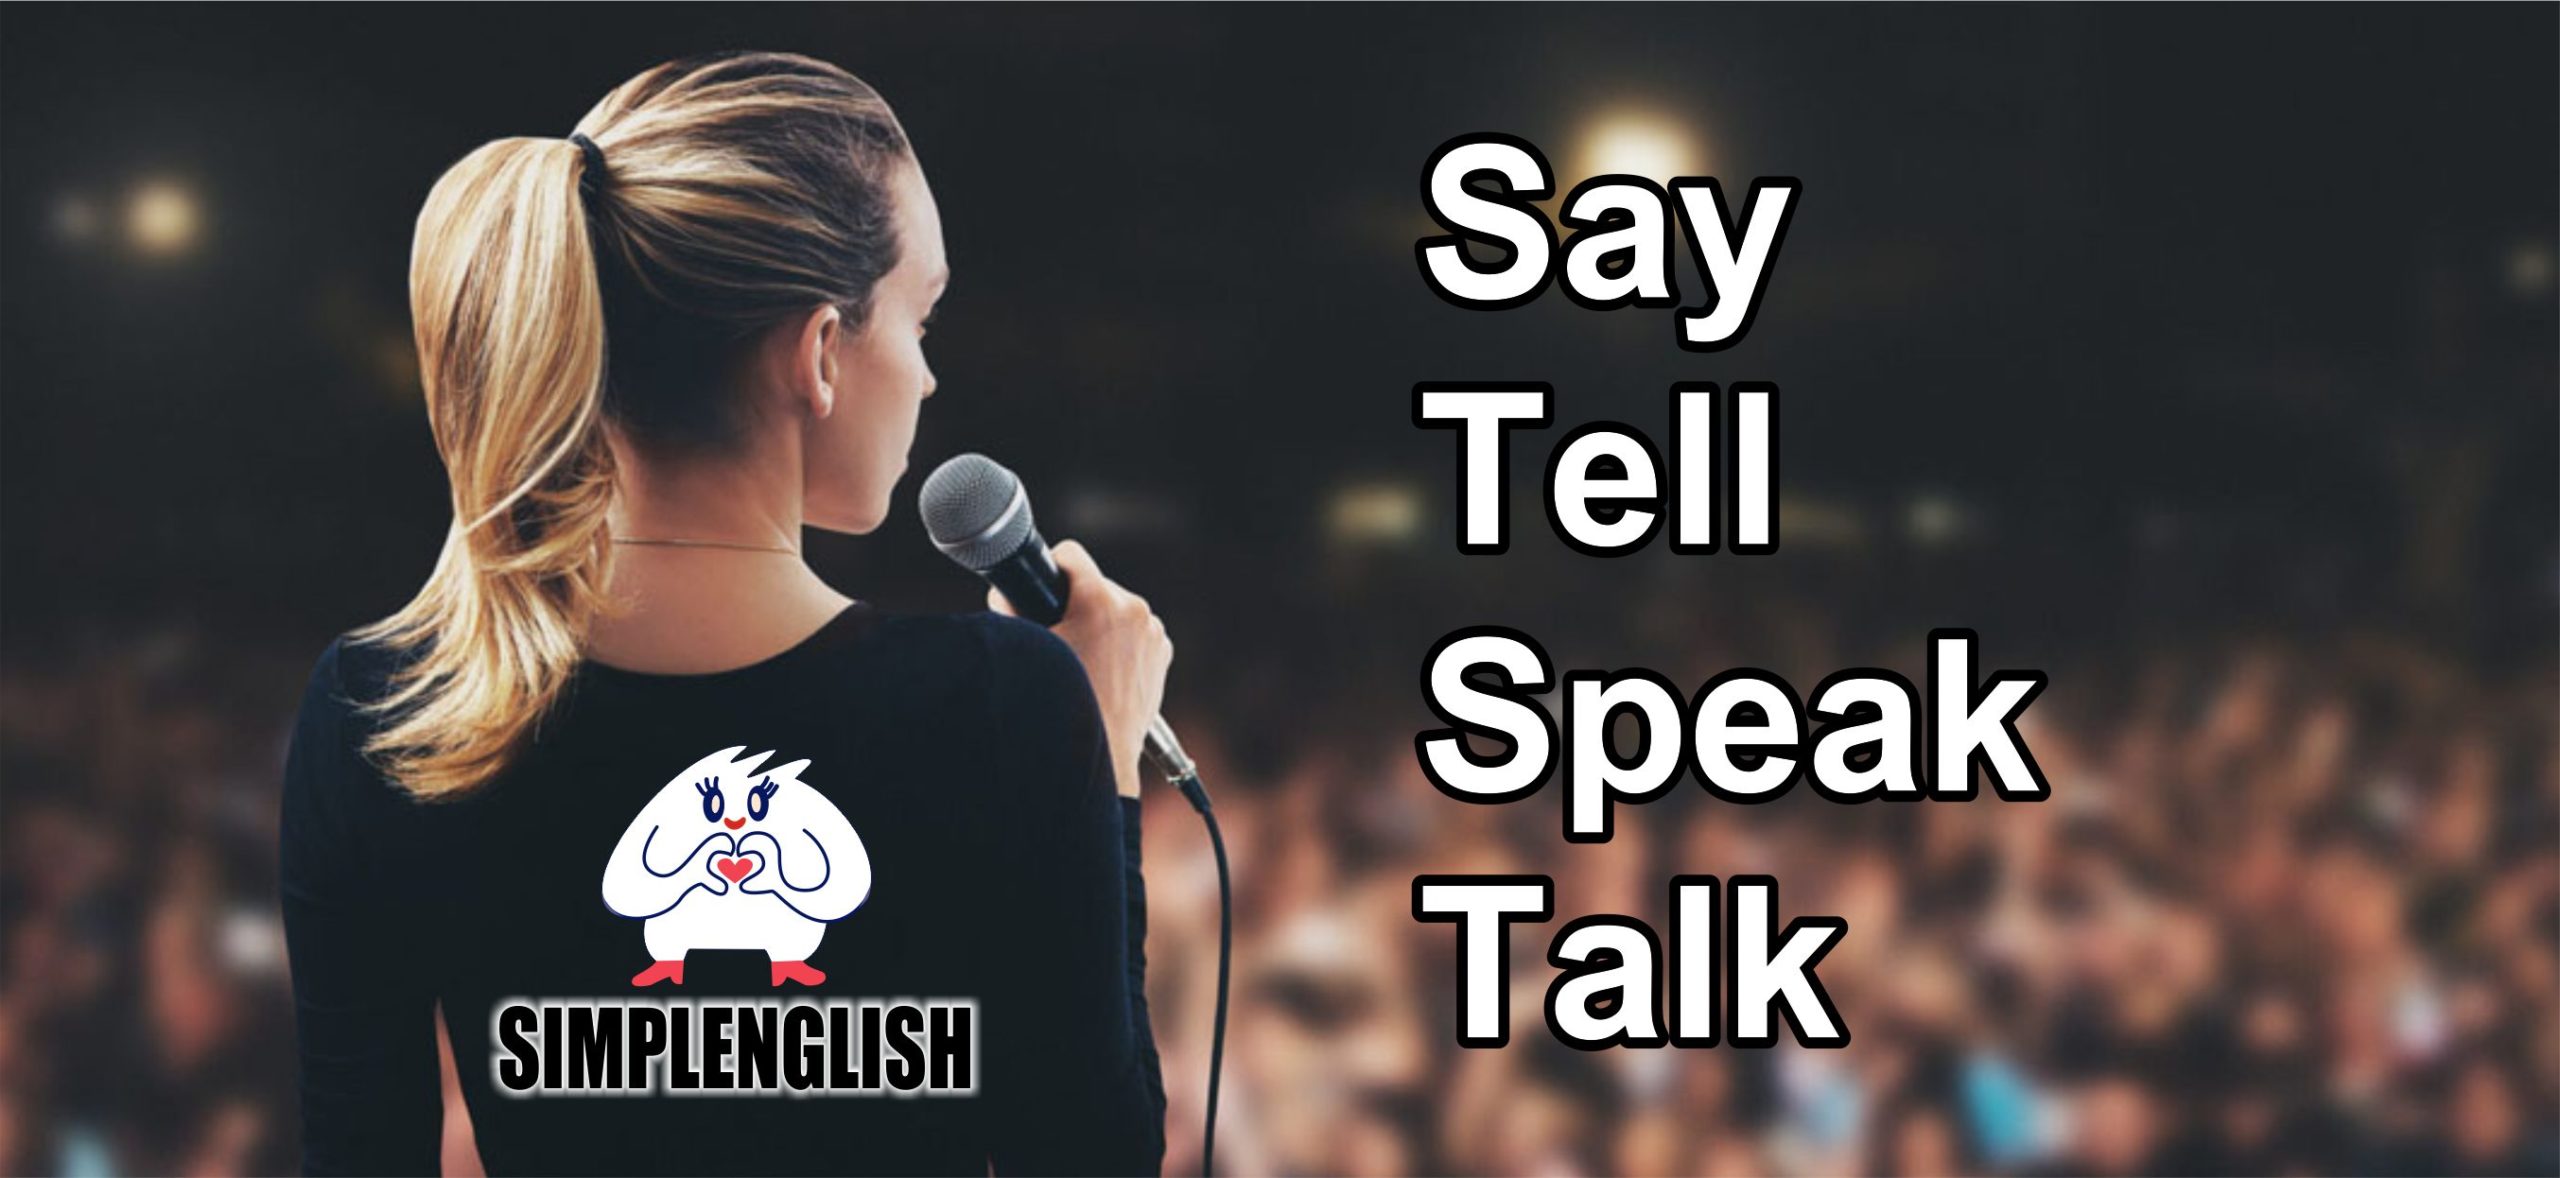 Say tell speak talk